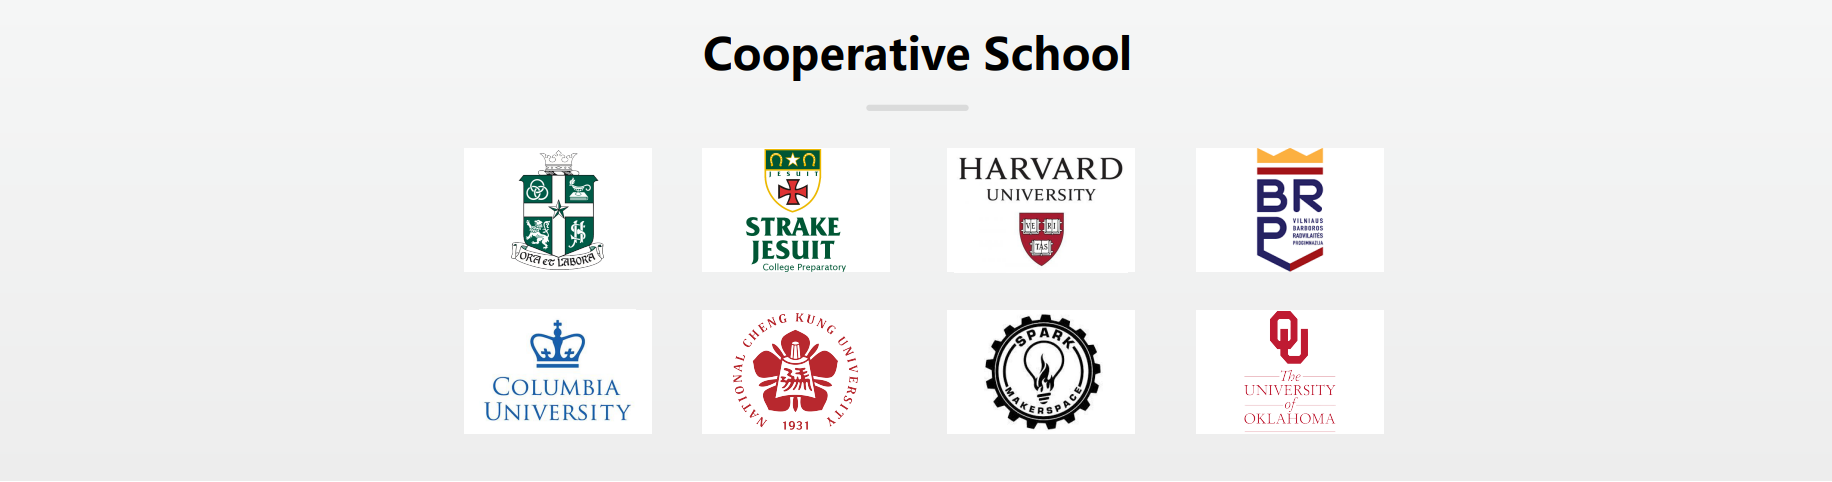 Cooperative school